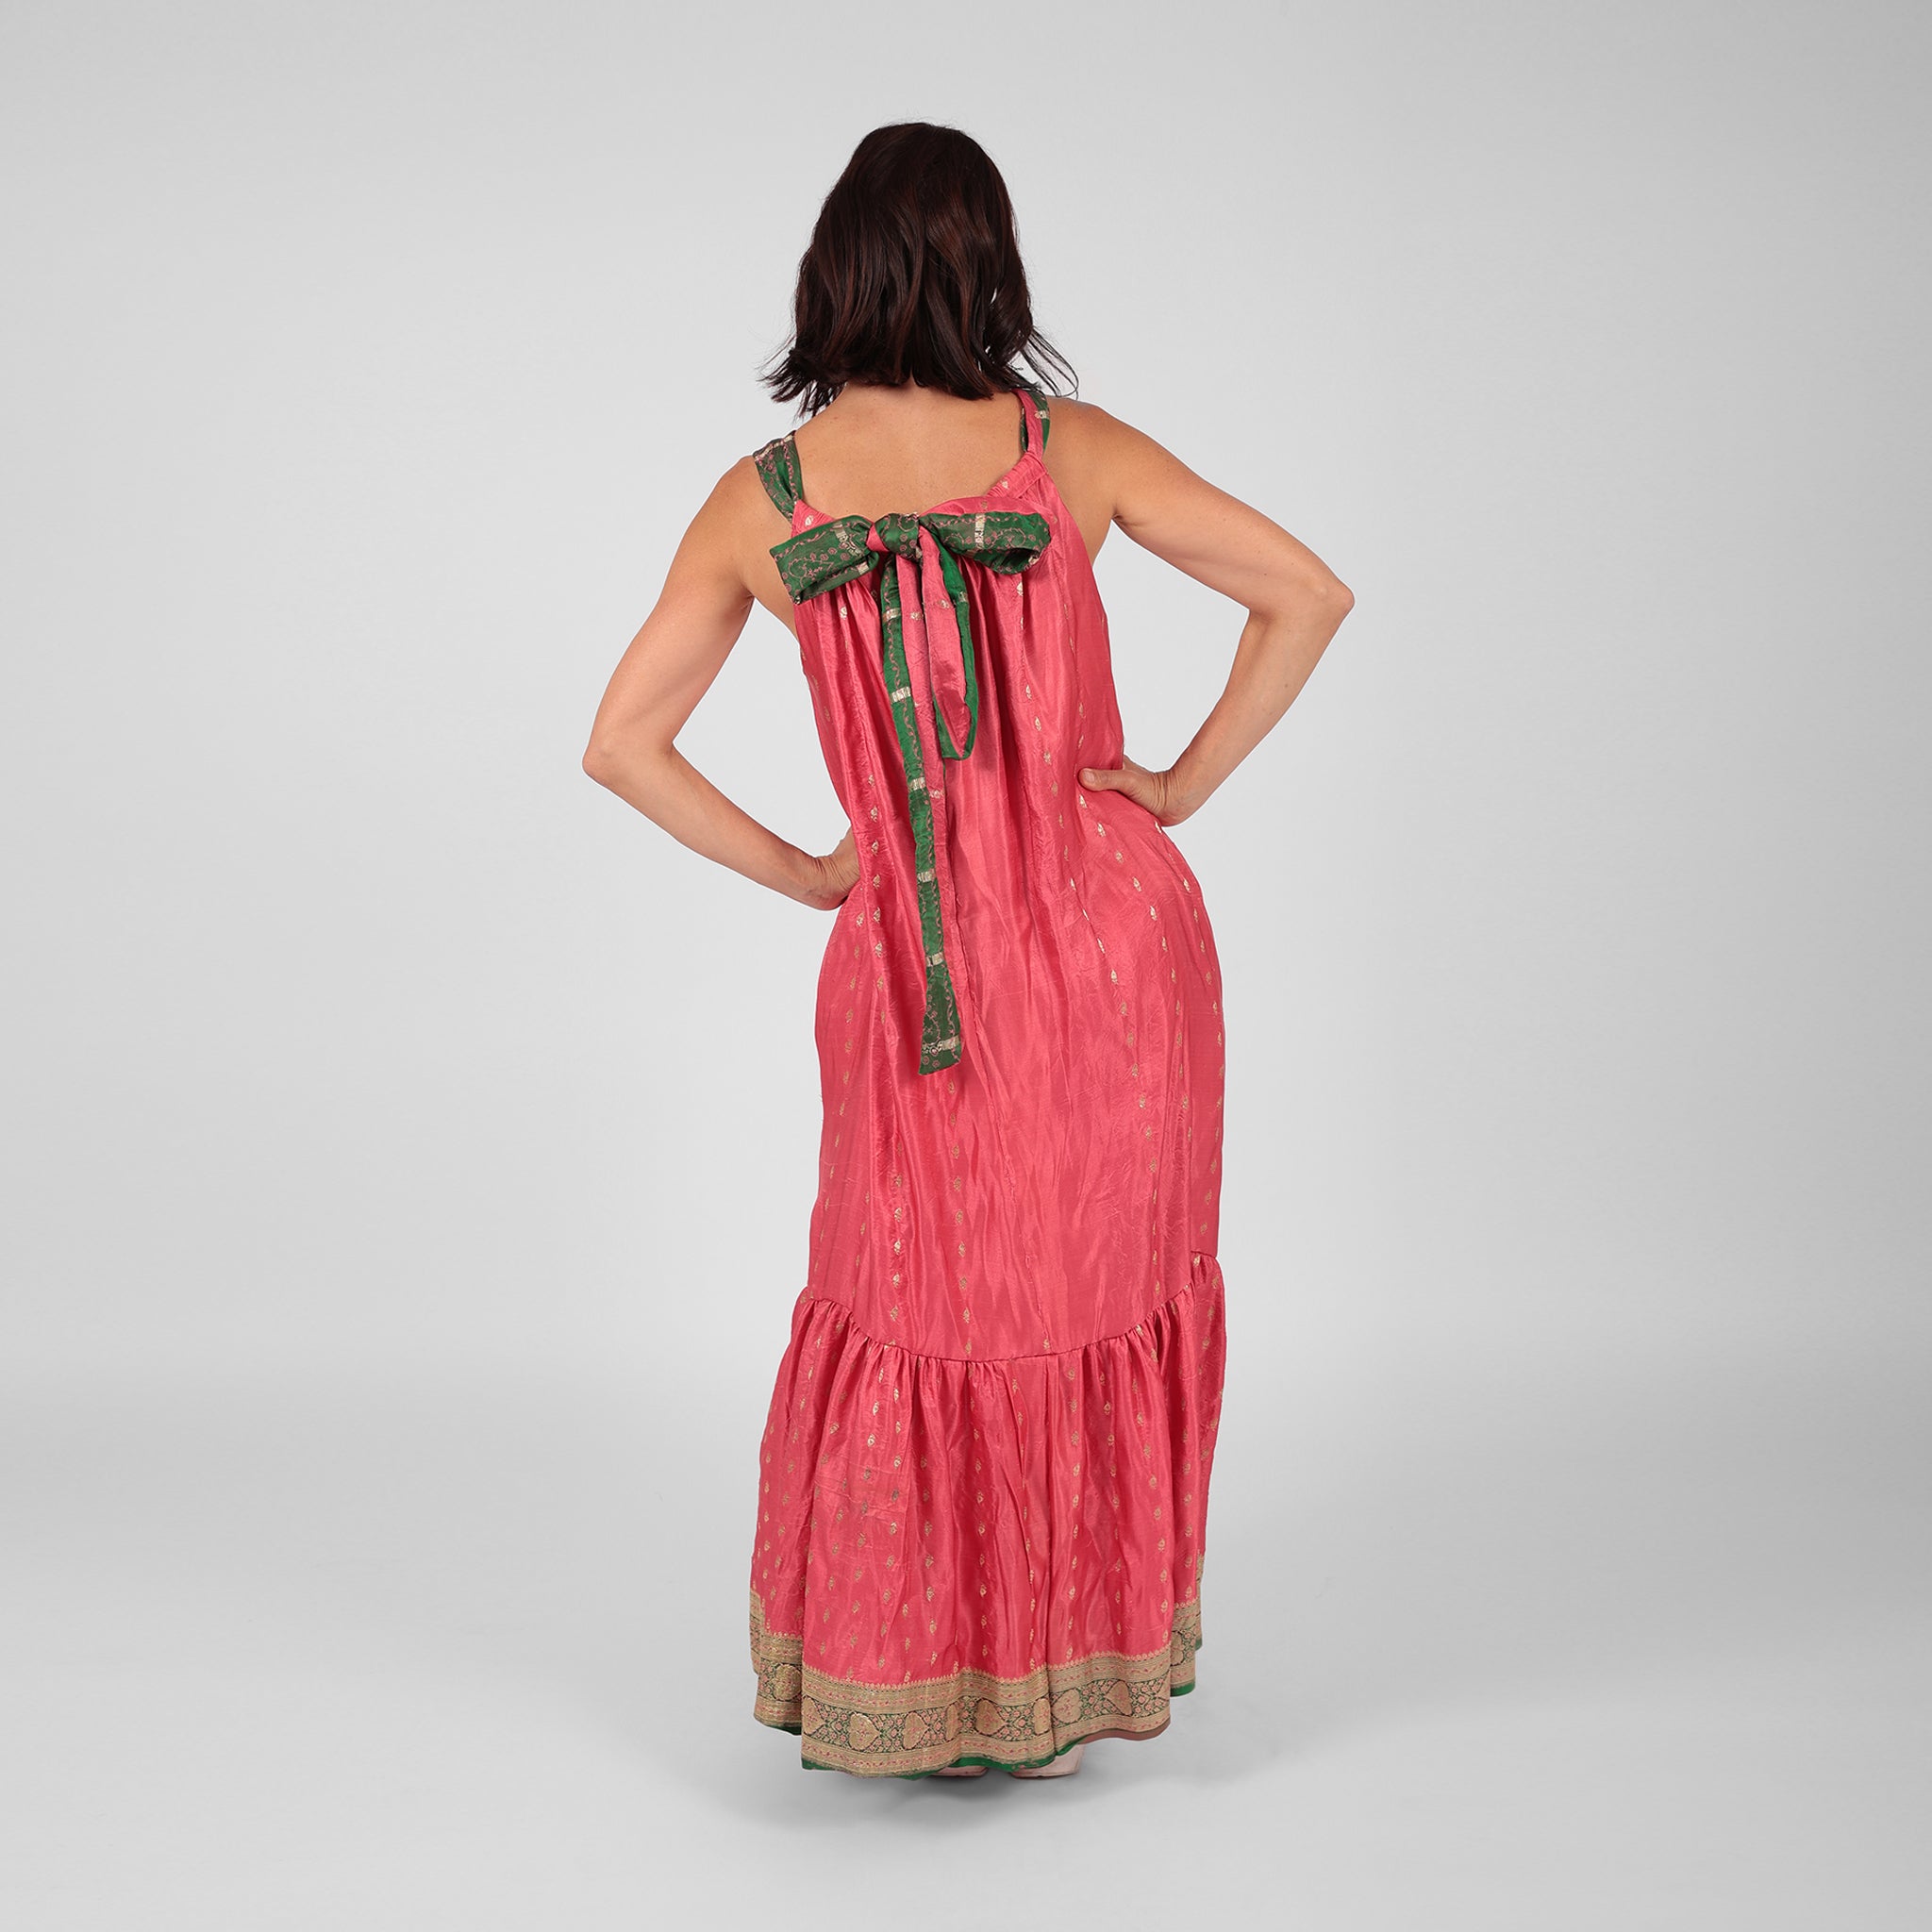 Roosa - Vintage Silk Sari Pink Diamond Maxi Dress back view with bow detail